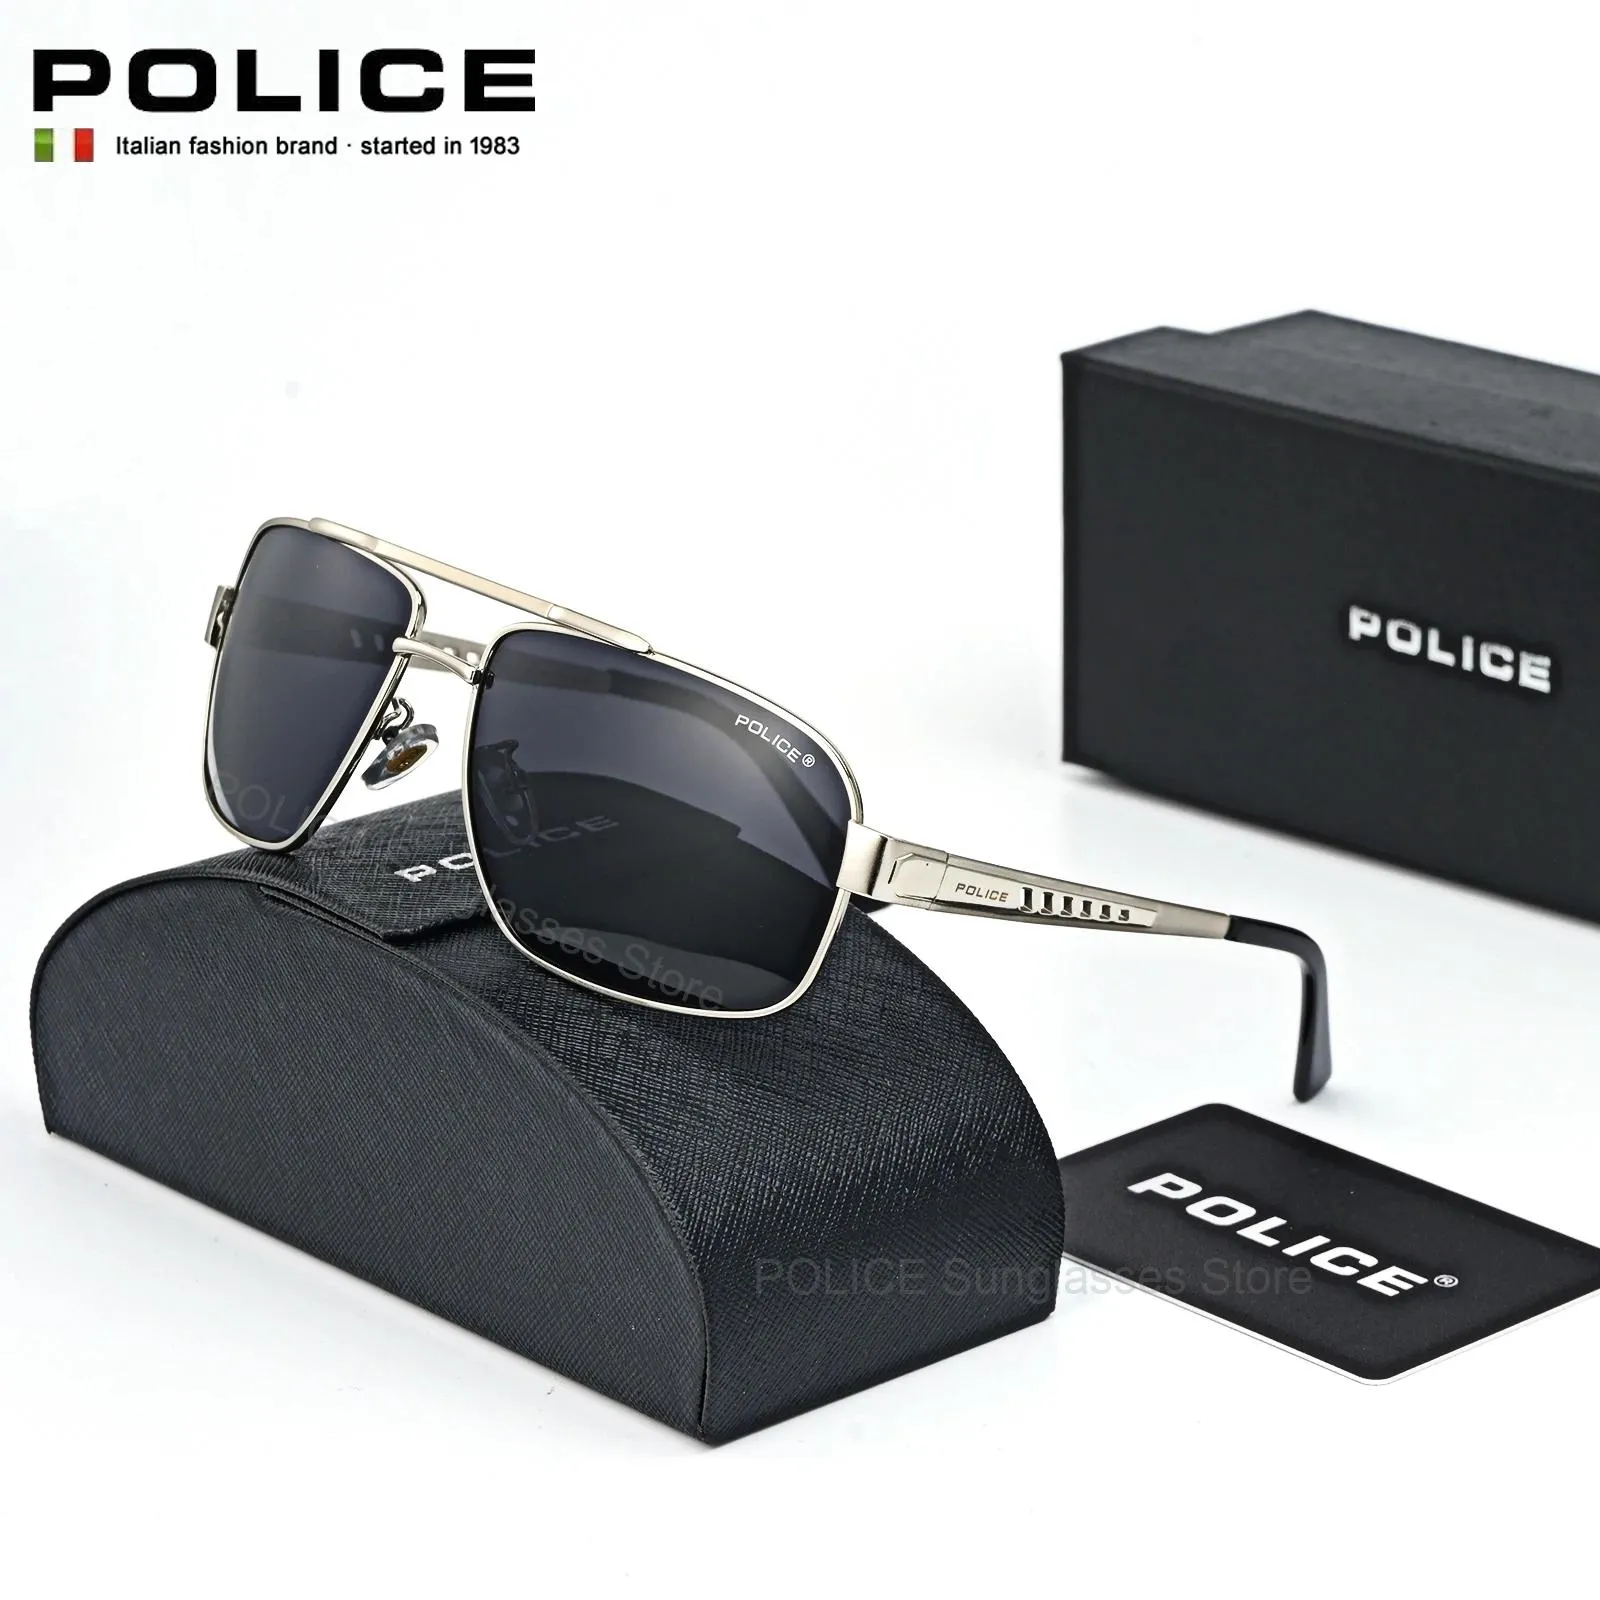 Sunglasses Police Brand Uv400 Sunglasses Fashion Trend Men